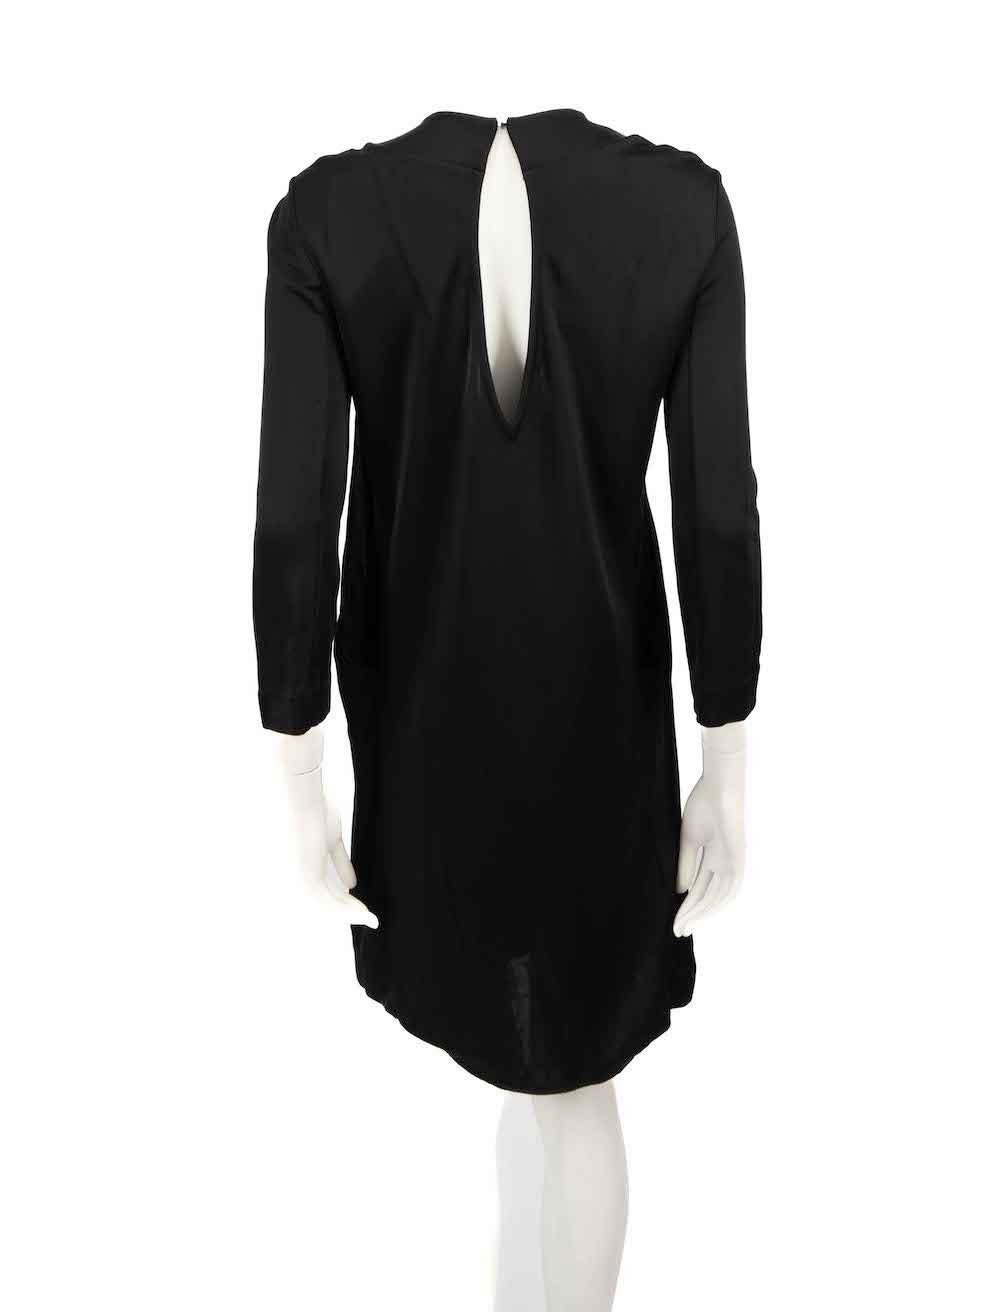 Miu Miu Black Drape Detail Mini Dress Size M In Excellent Condition For Sale In London, GB